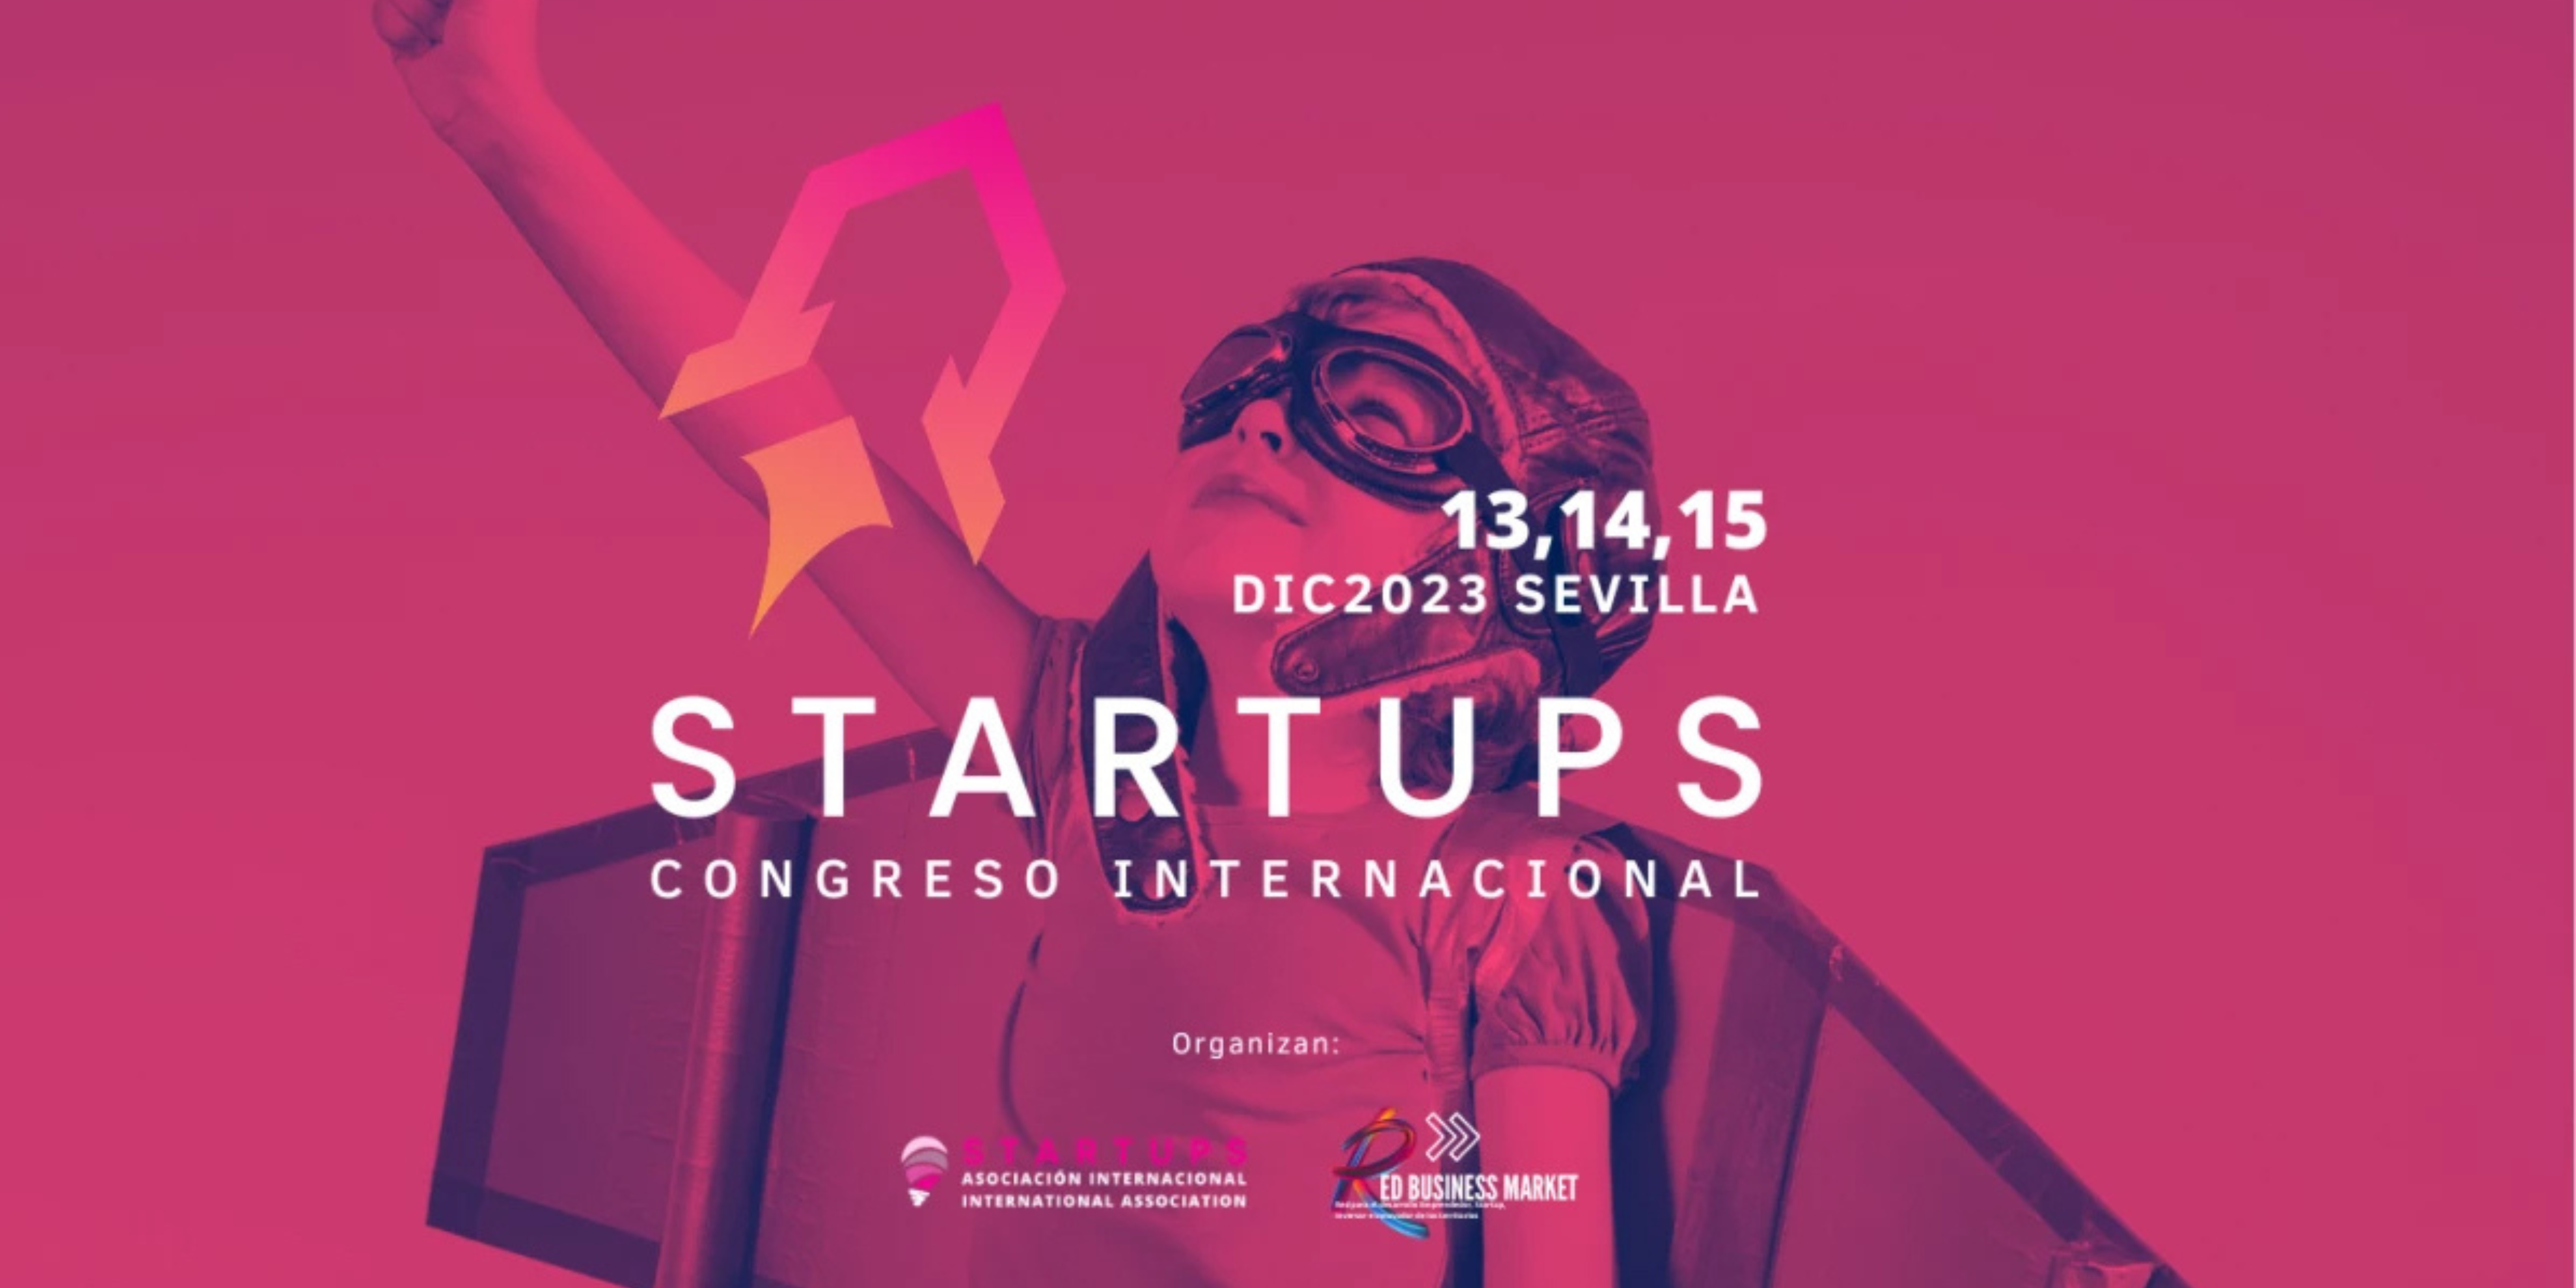 Innovation and Empowerment: female entrepreneurship highlights at the International Startups Congress in Seville